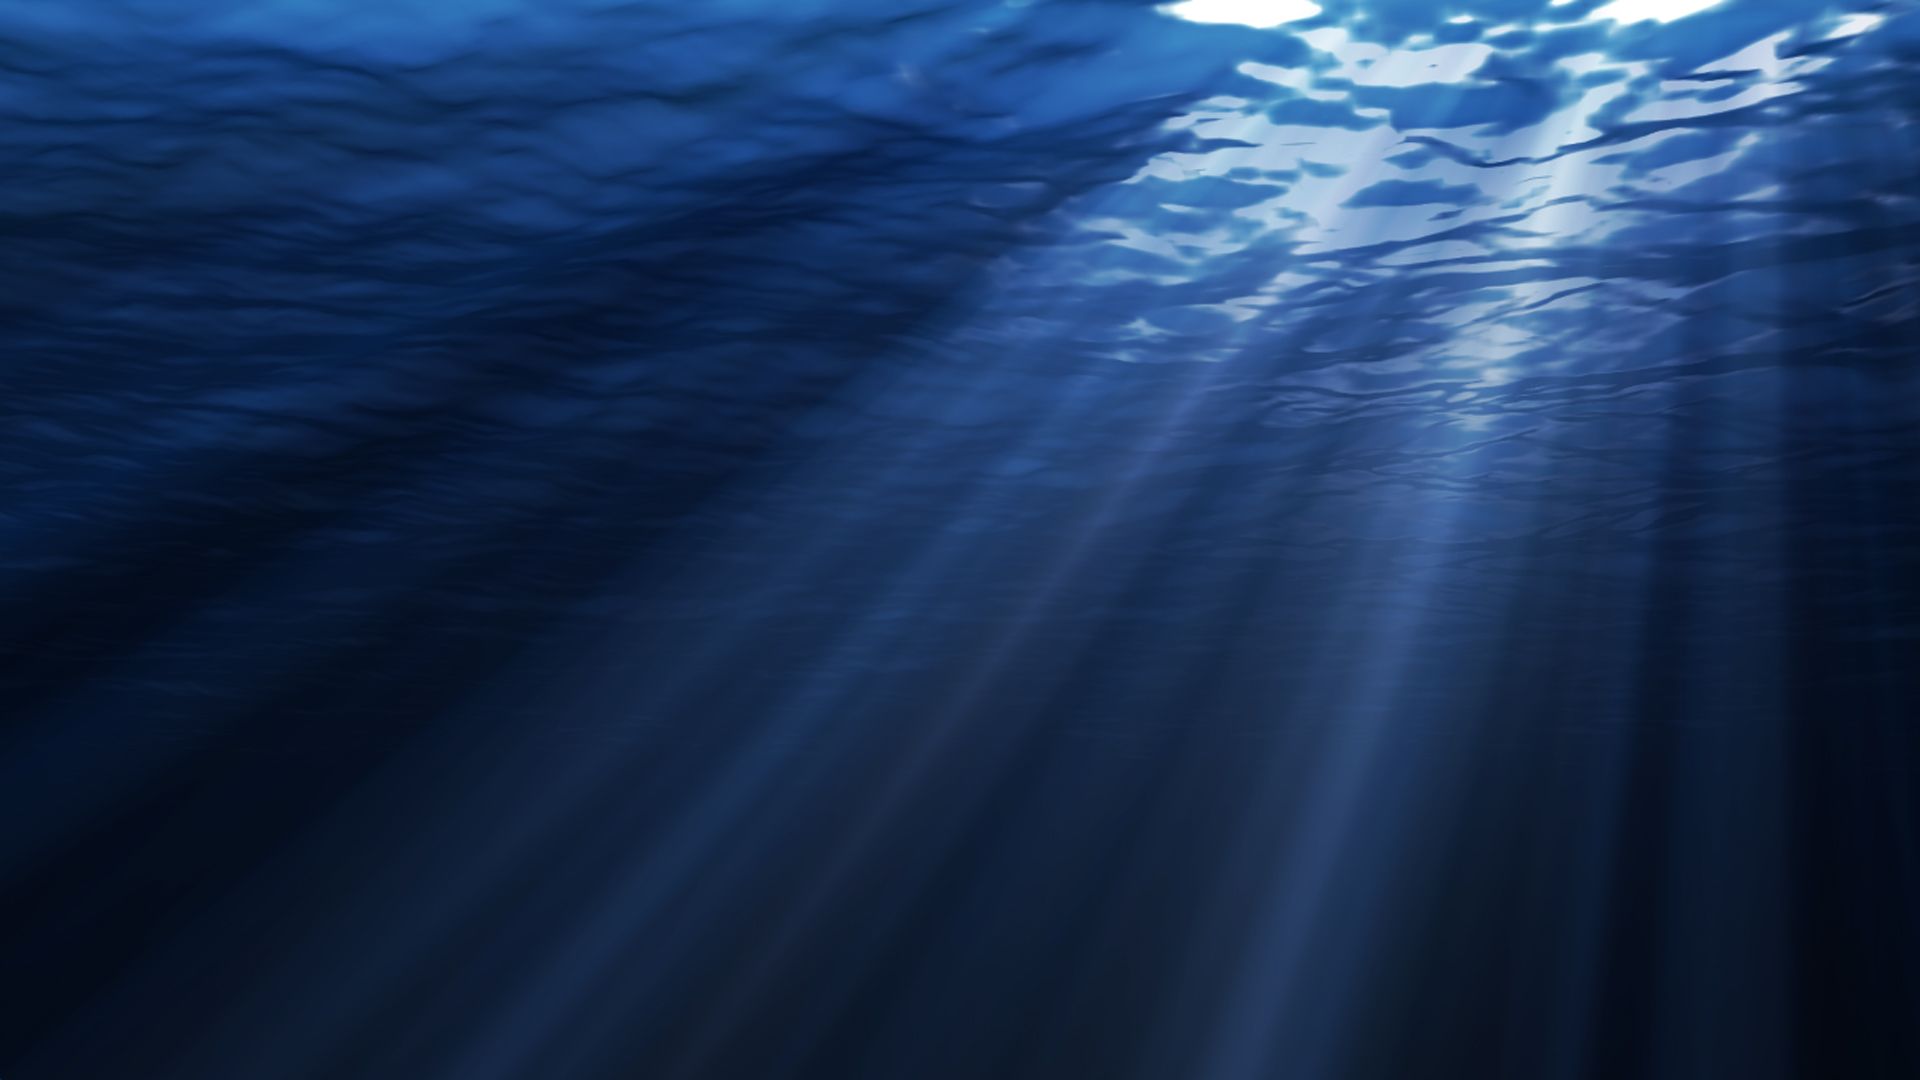 Free download screensavers logonstudio explore underwater